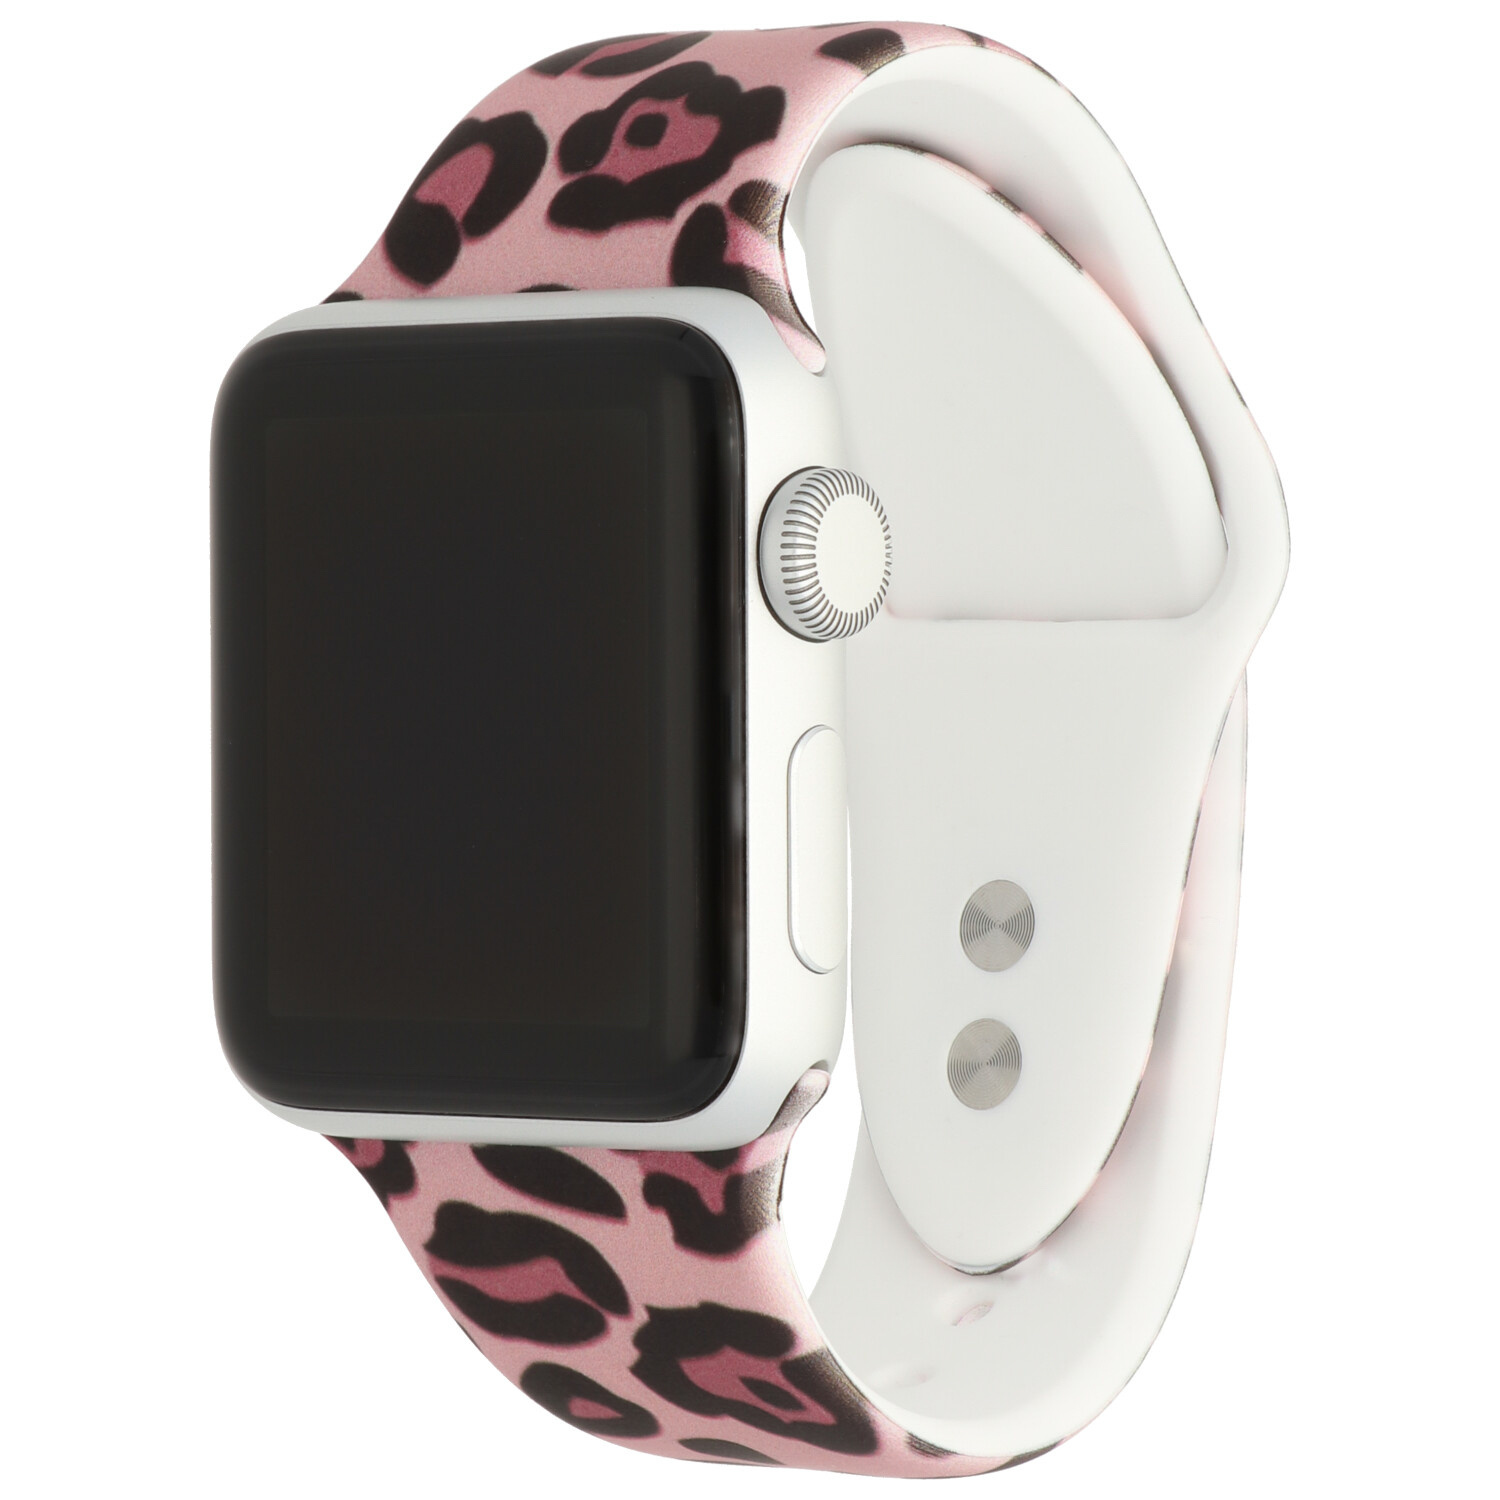 Bracelet sport imprimé Apple Watch - rose pâle panthère